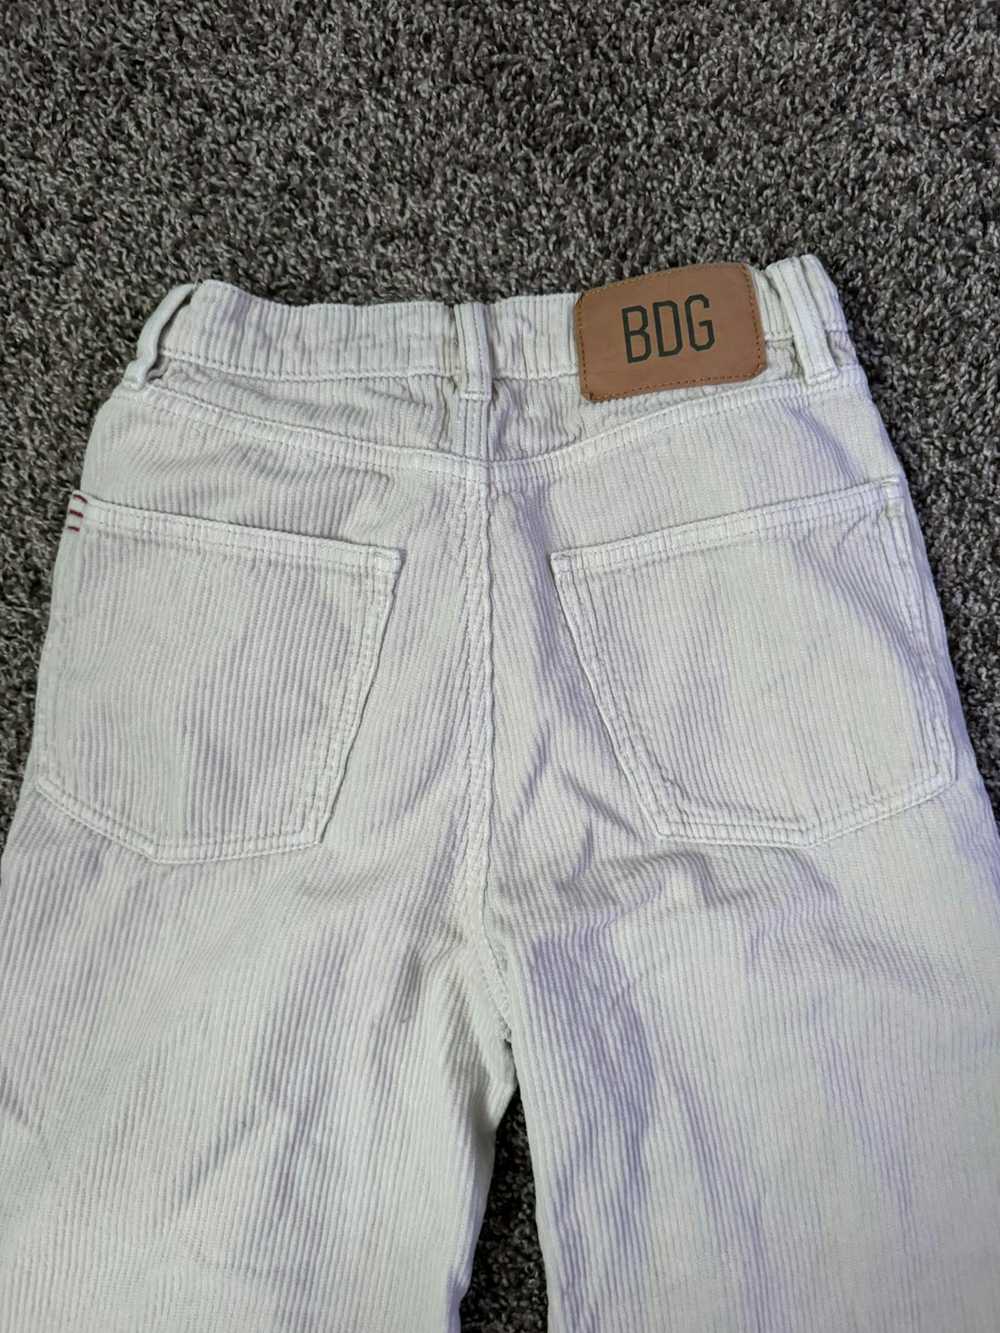 Bdg Urban Outfitter BDG Corduroy Pants - image 3